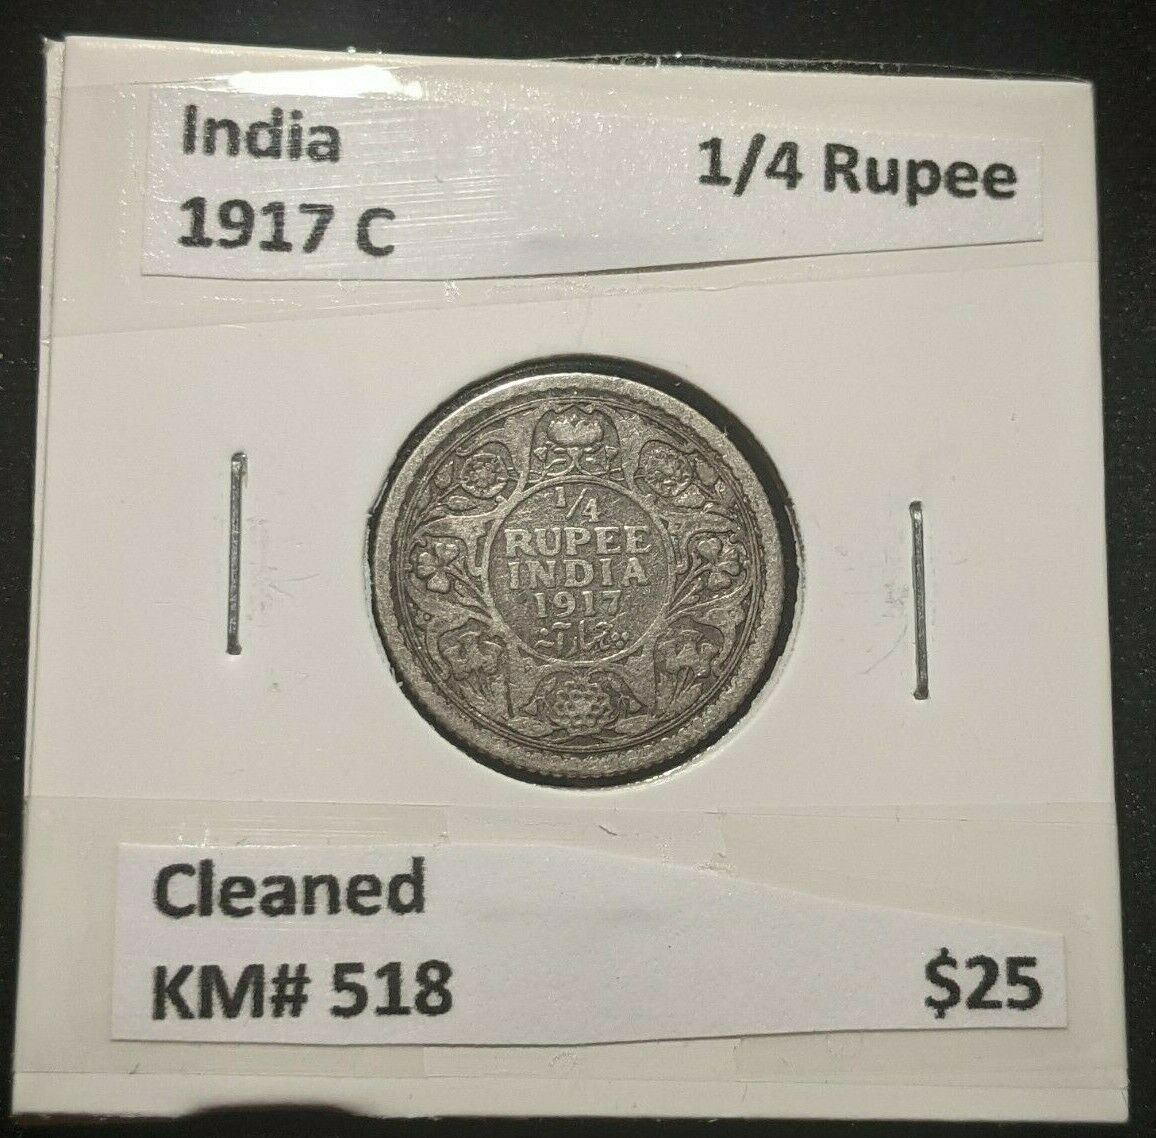 India 1917 C 1/4 Rupee KM# 518 Cleaned #340